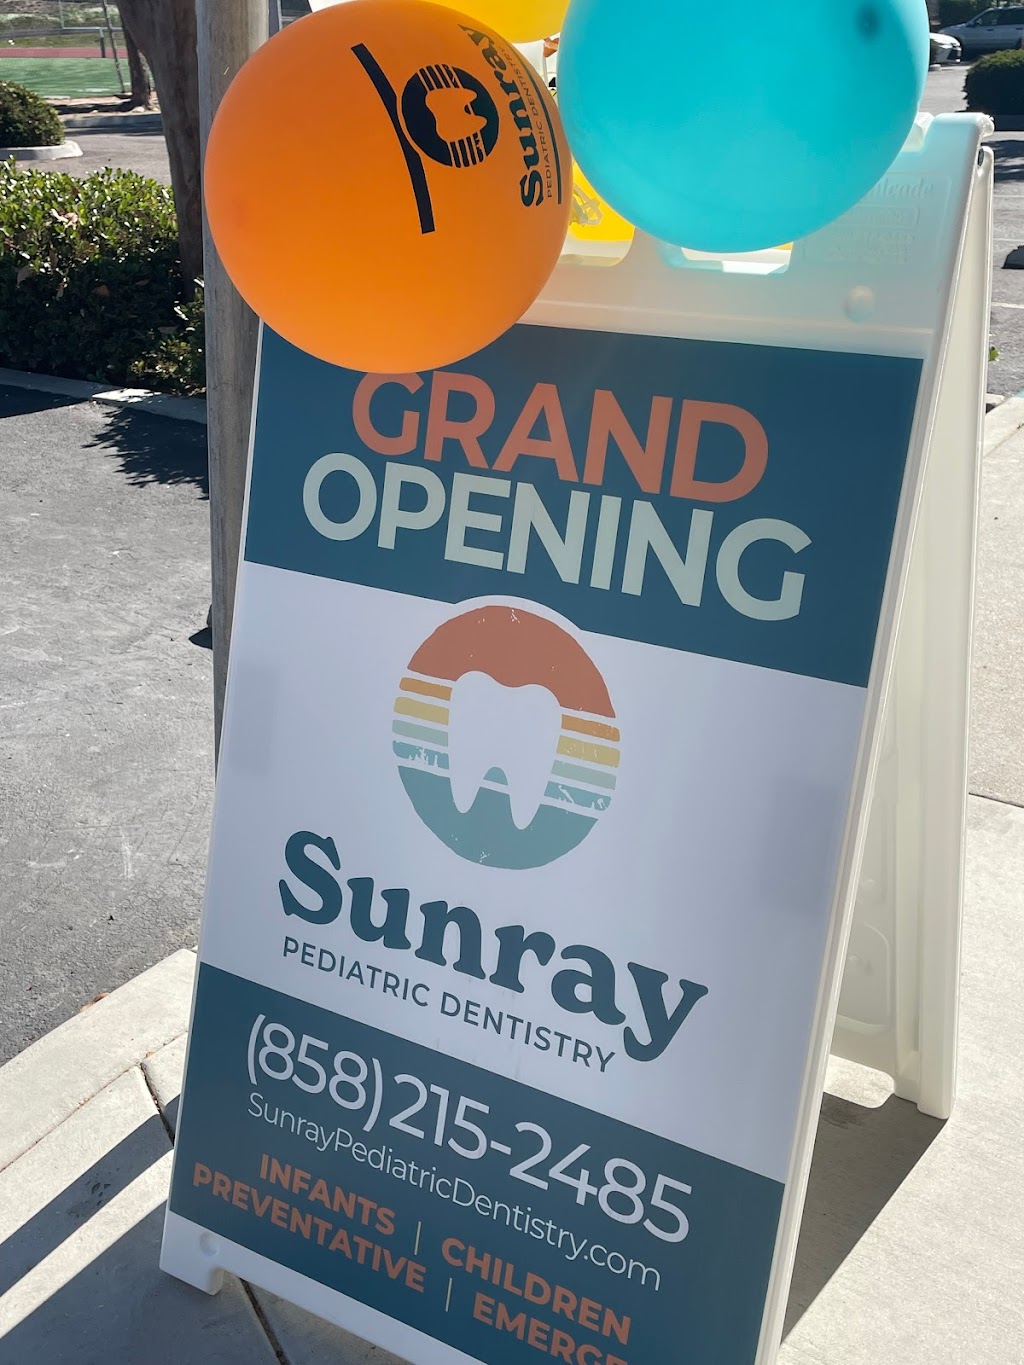 Sunray Pediatric Dentistry | 13350 Camino del Sur Ste 3B, San Diego, CA 92129 | Phone: (858) 215-2485